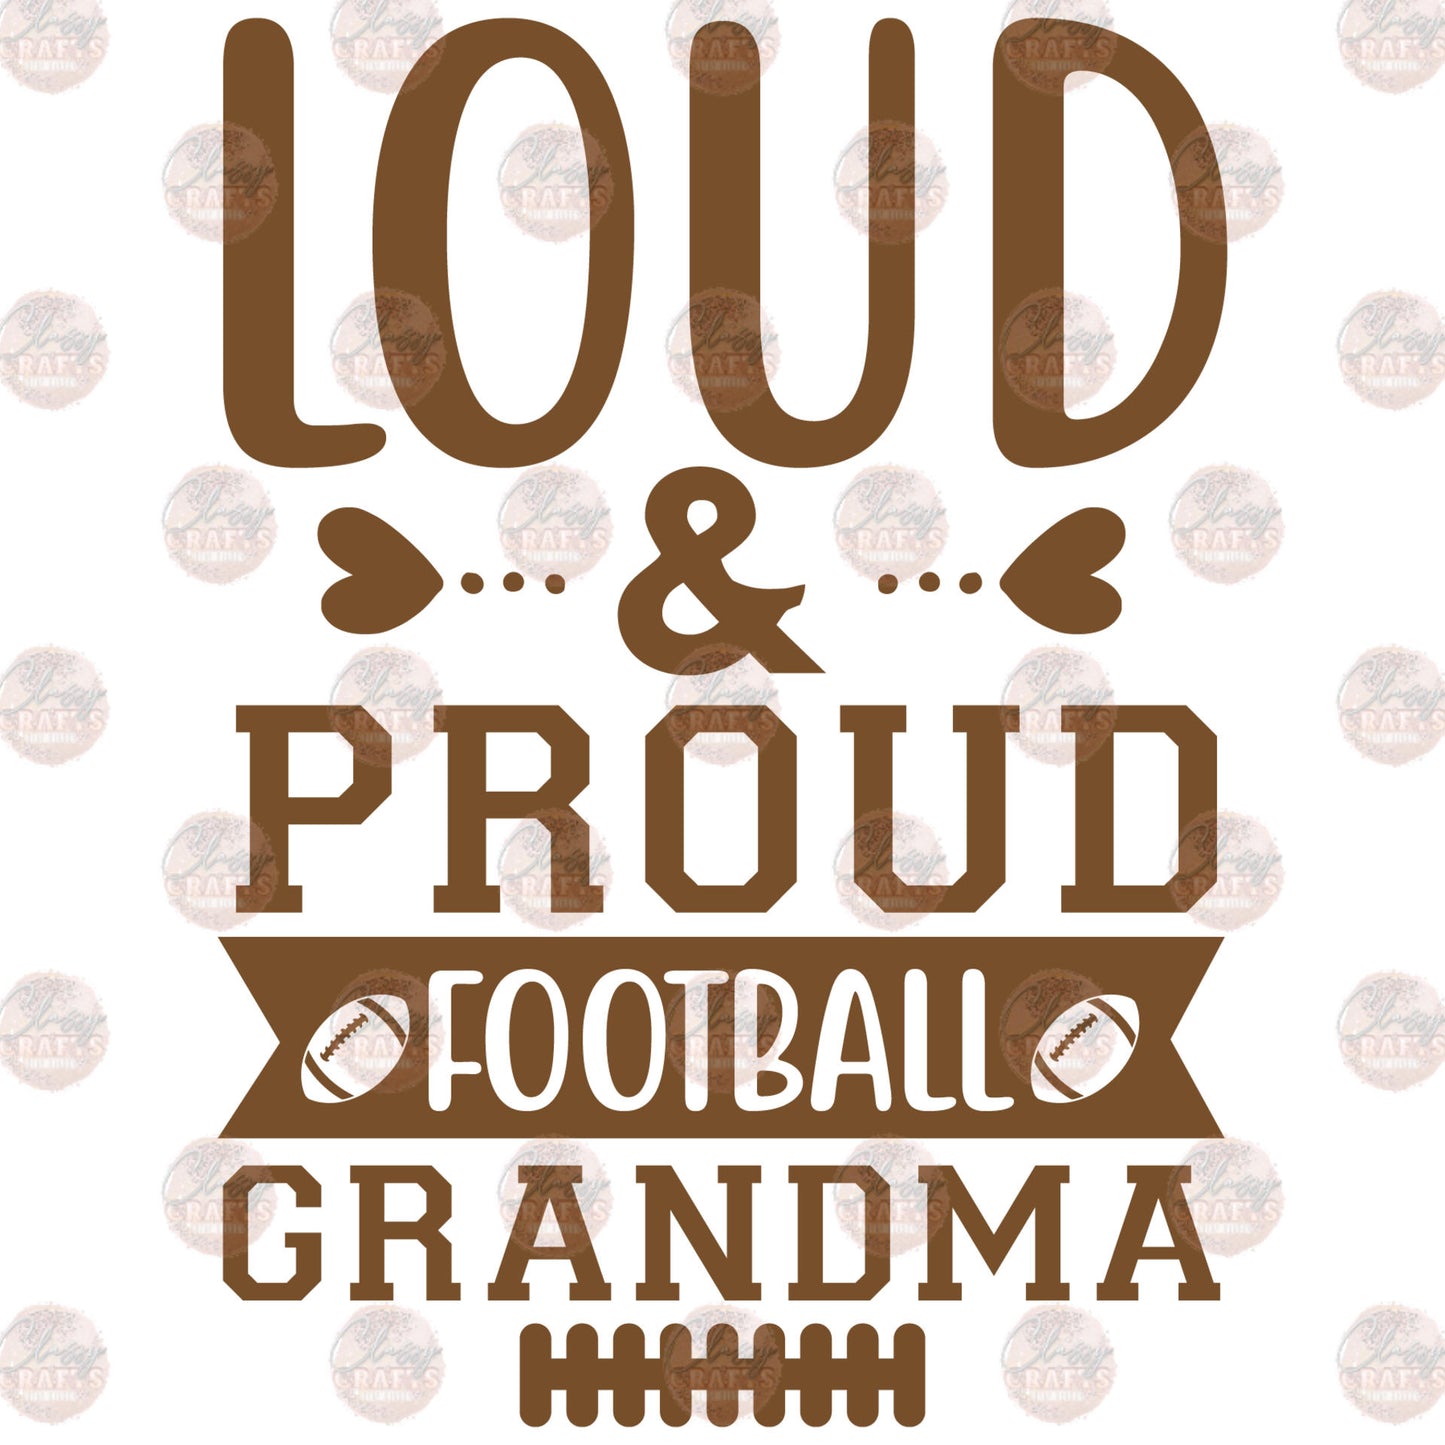 Proud Football Grandma - Sublimation Transfer